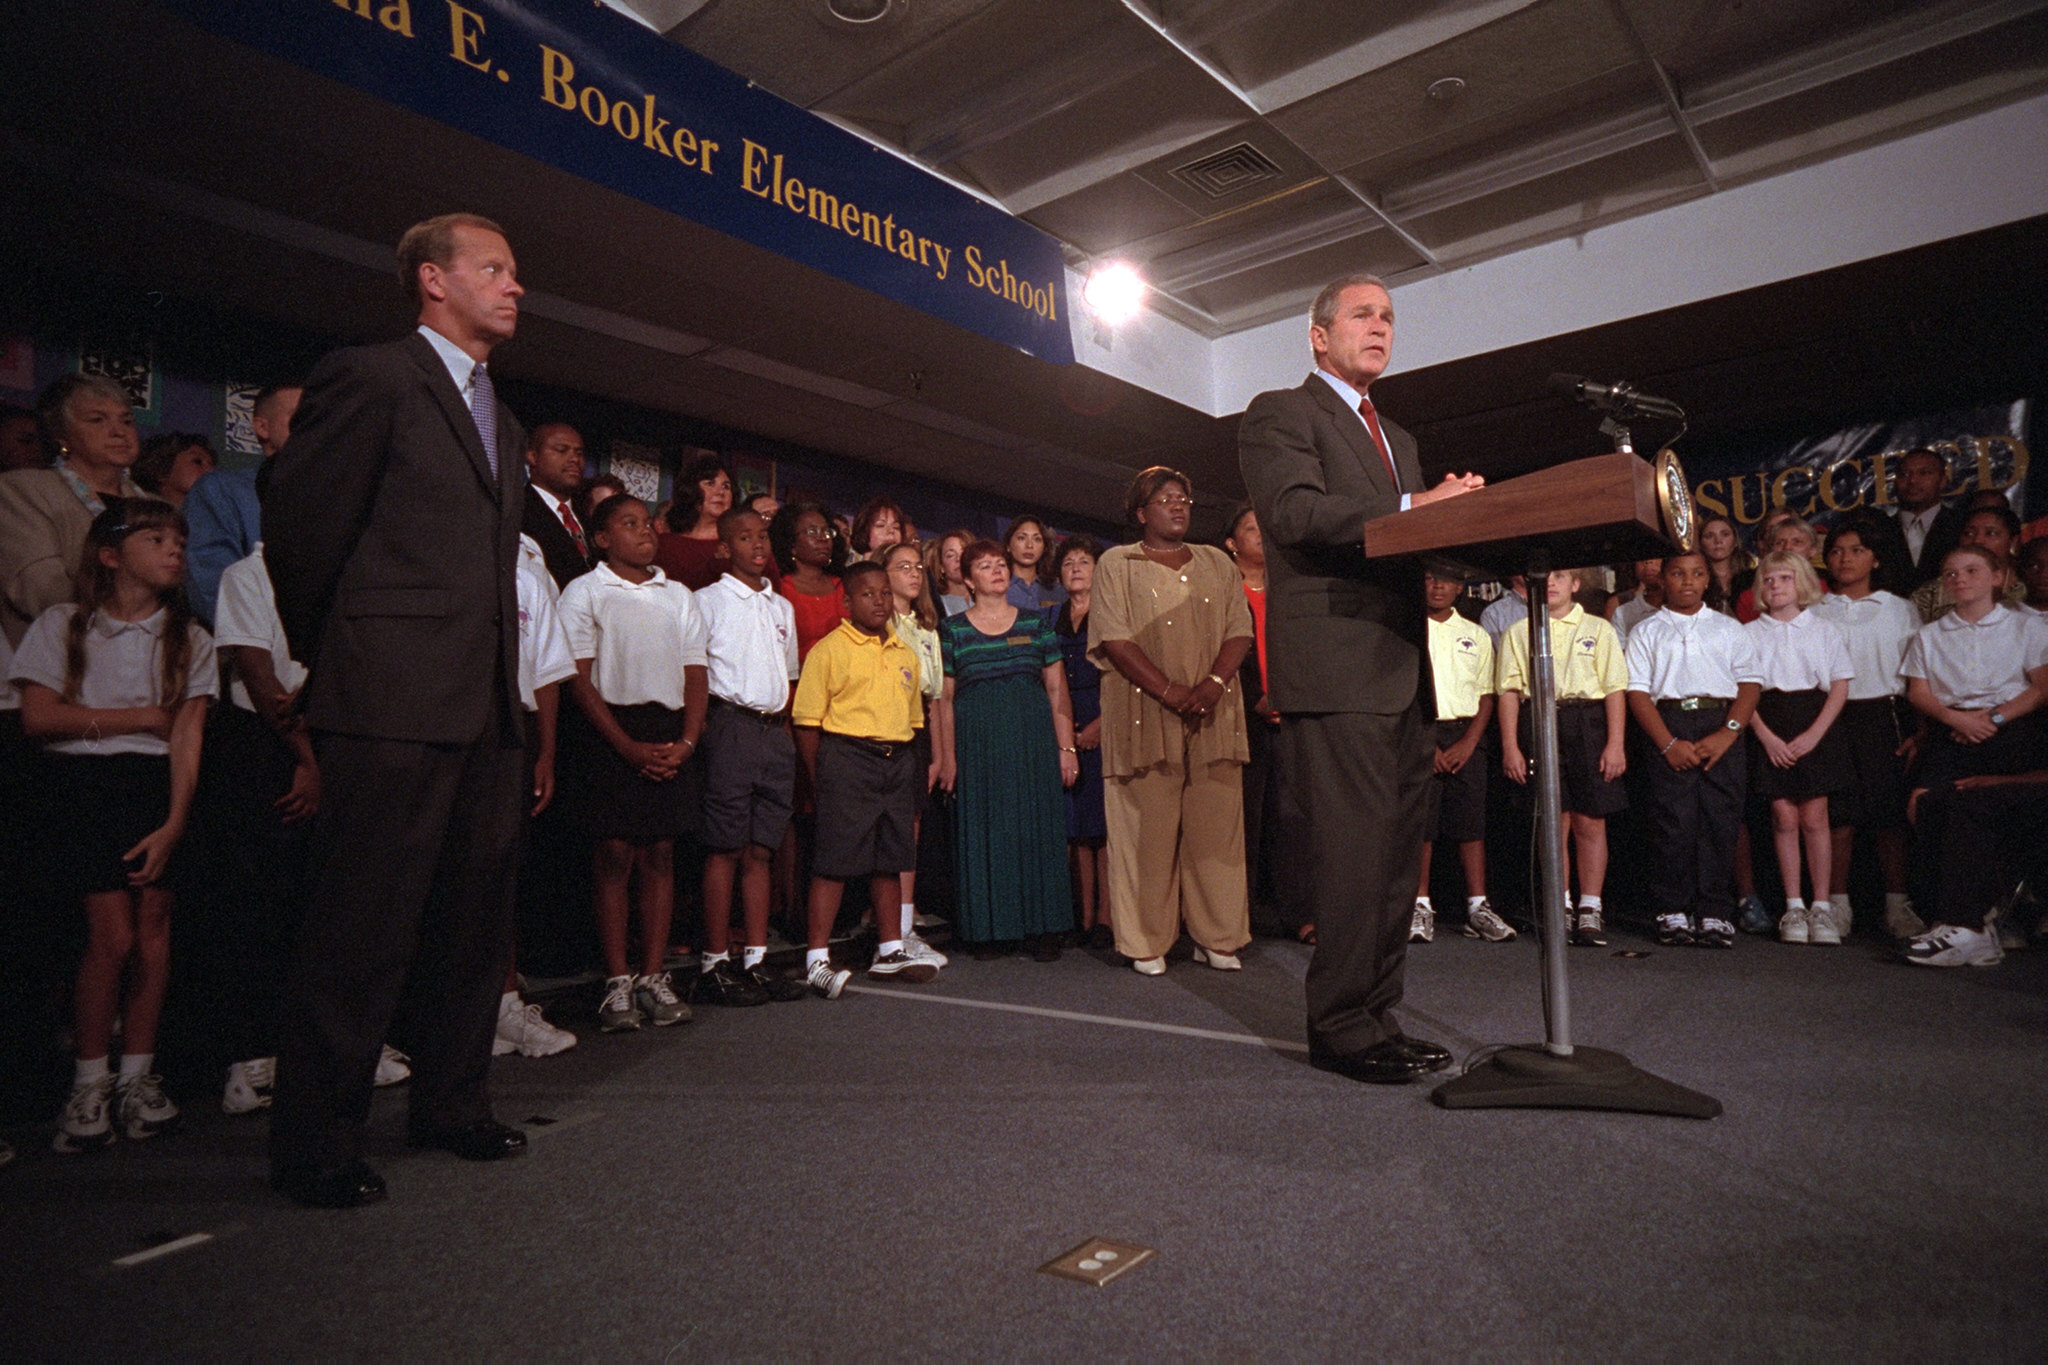 President George W. Bush stands at a podium with children standing around him